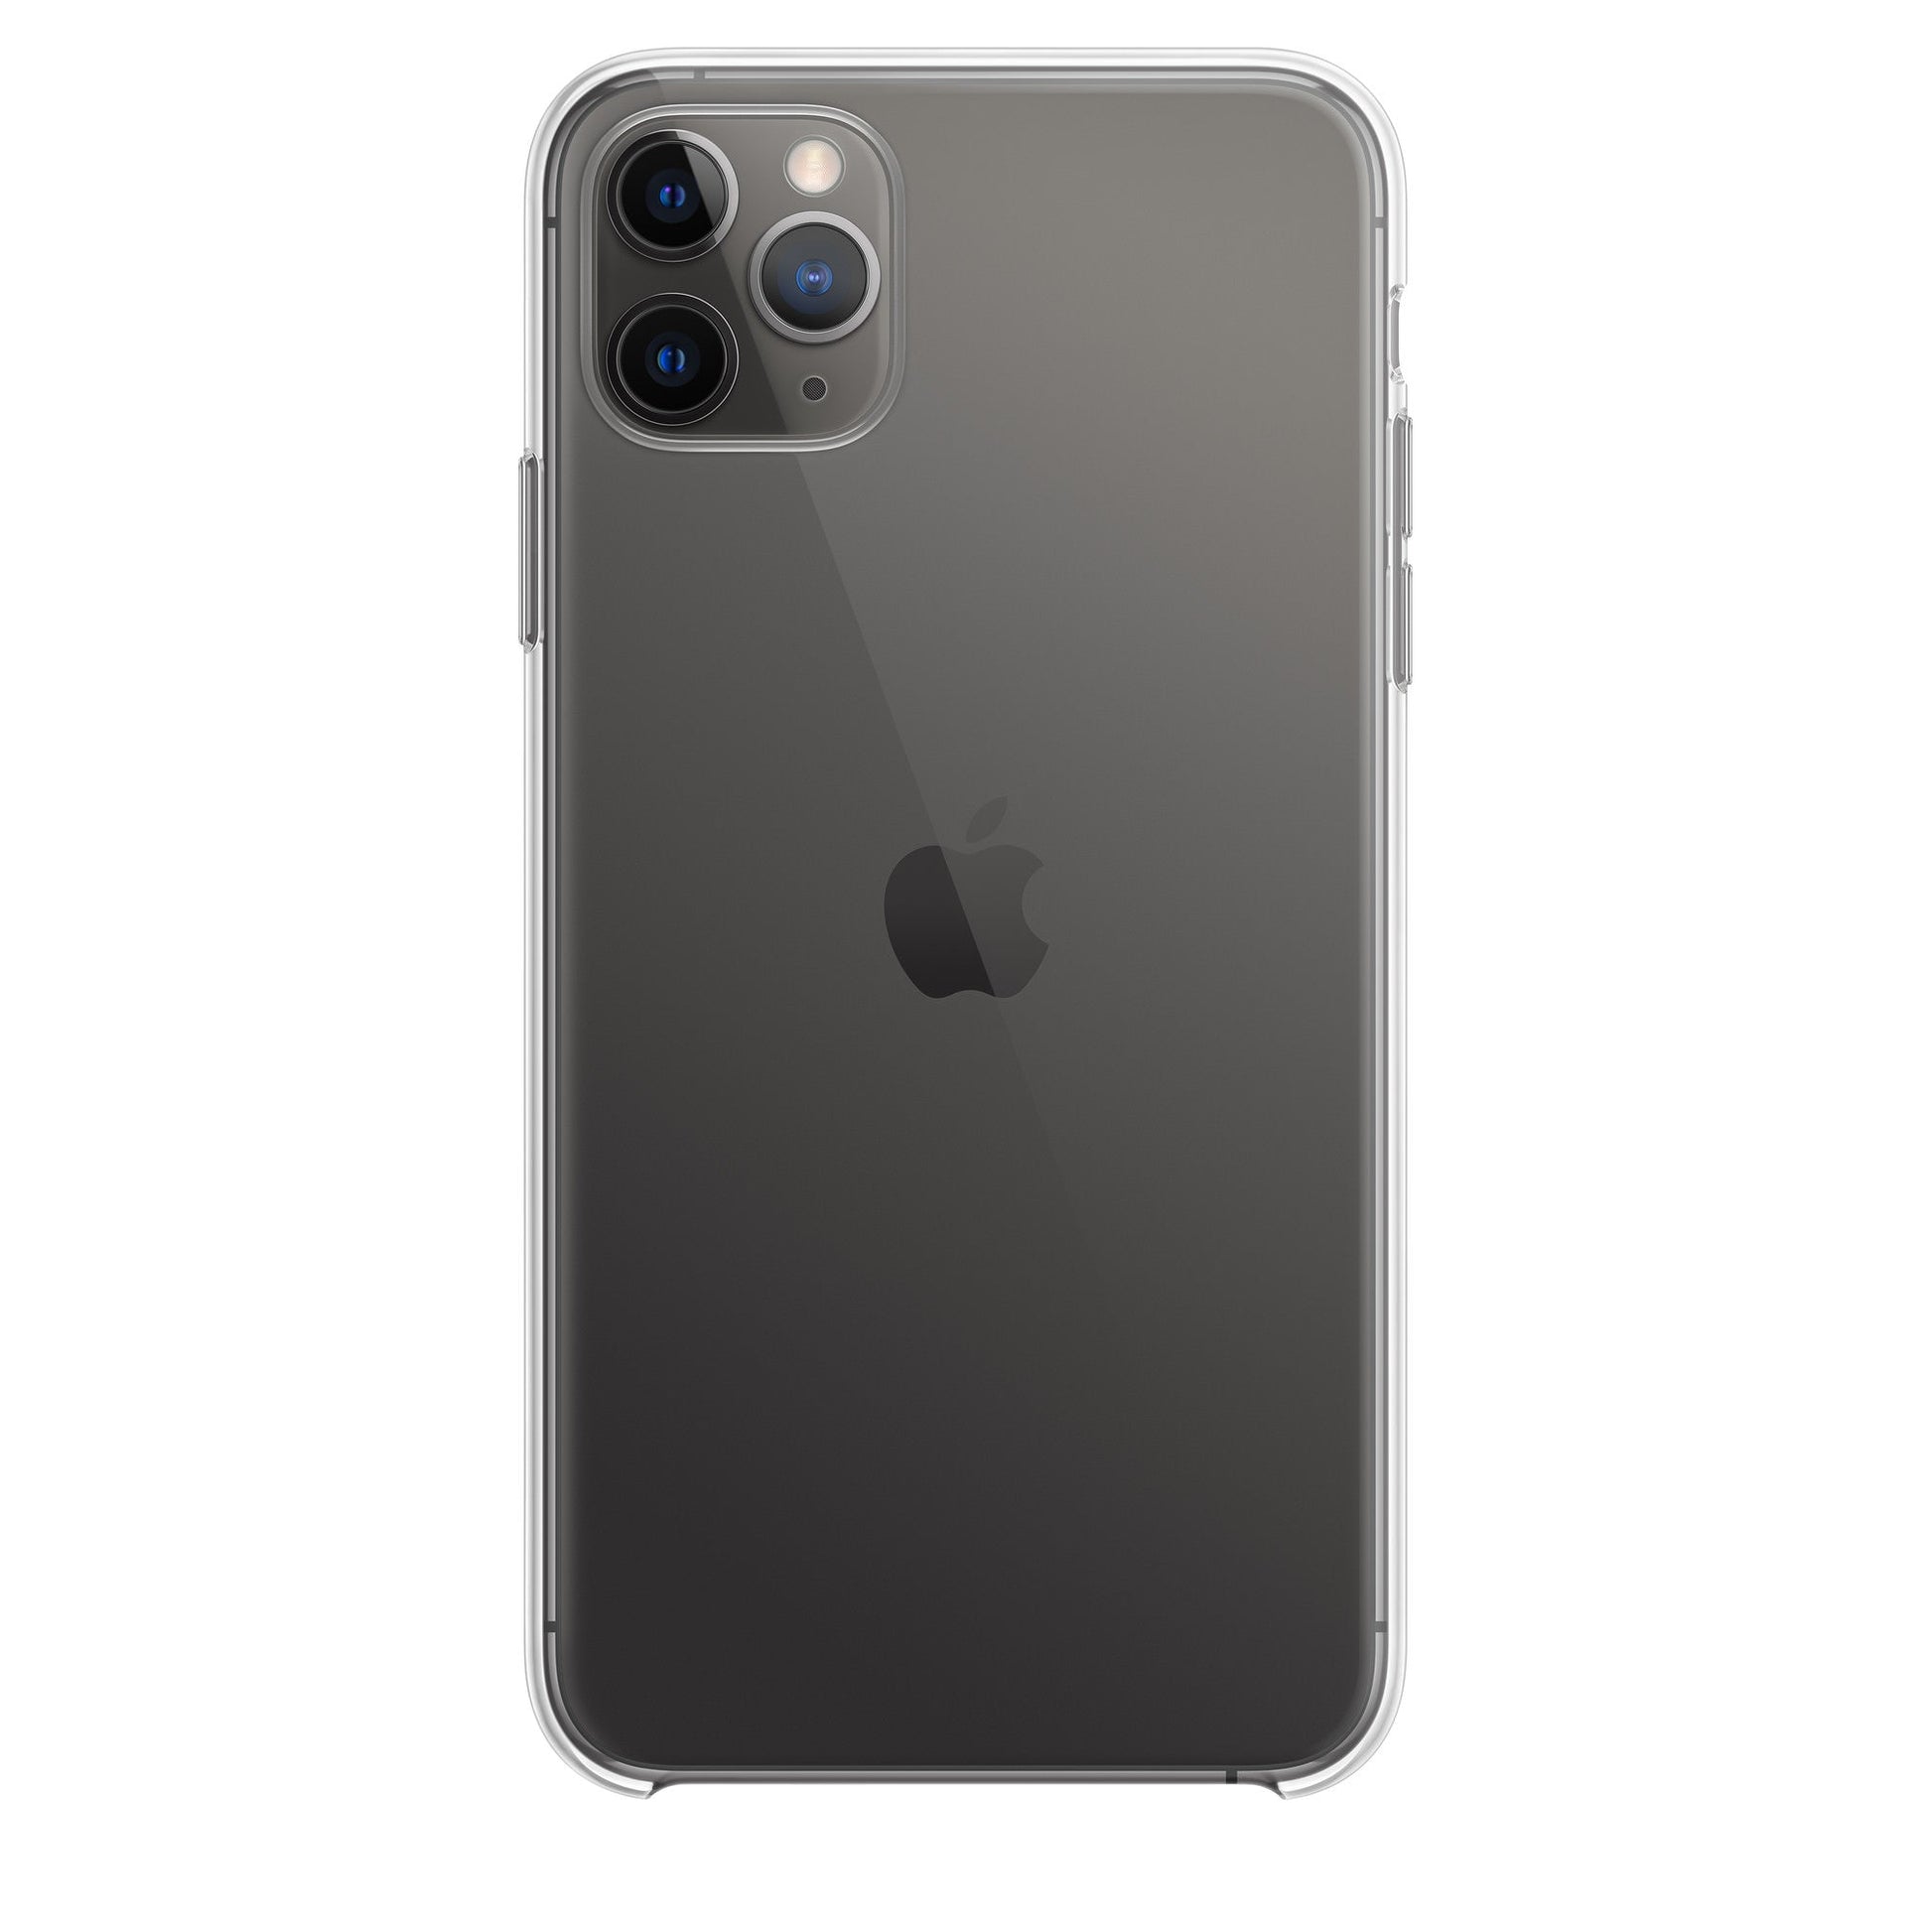 Husa Silicon Clear Apple pt. iPhone 11 Pro Max - MX0H2ZM/A Originala Resigilat - 190199287532 - 4